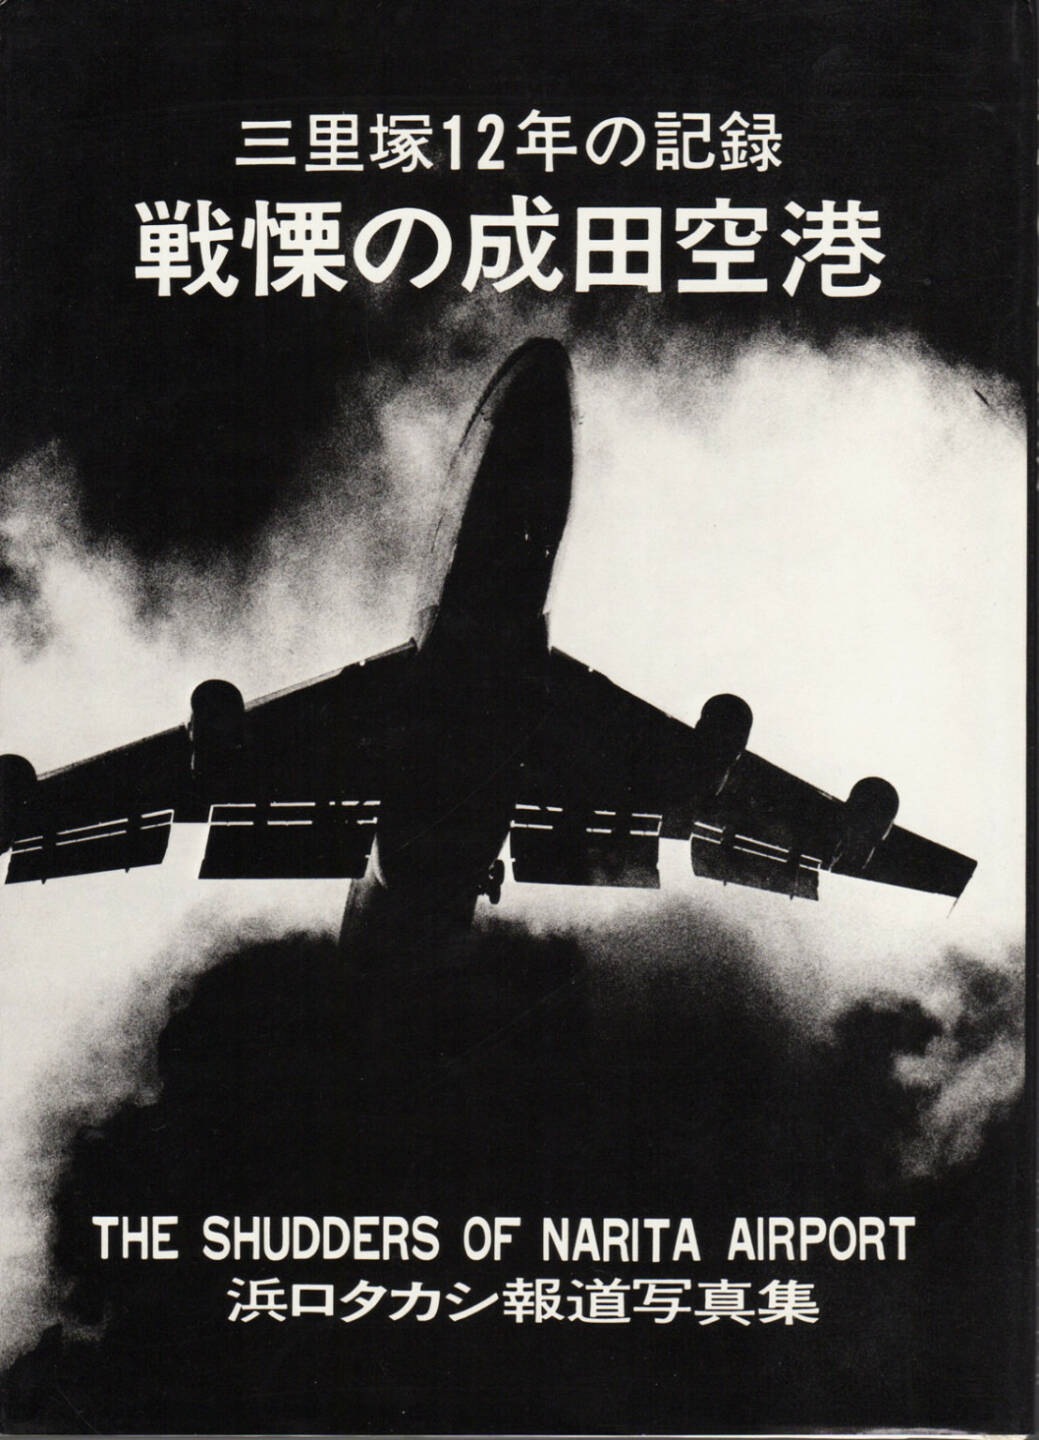 Takashi Hamaguchi - The Shudders of Narita Airport / Document Ju Nen no Kiroku (1978), 150-300 Euro, http://josefchladek.com/book/takashi_hamaguchi_-_the_shudders_of_narita_airport_document_ju_nen_no_kiroku